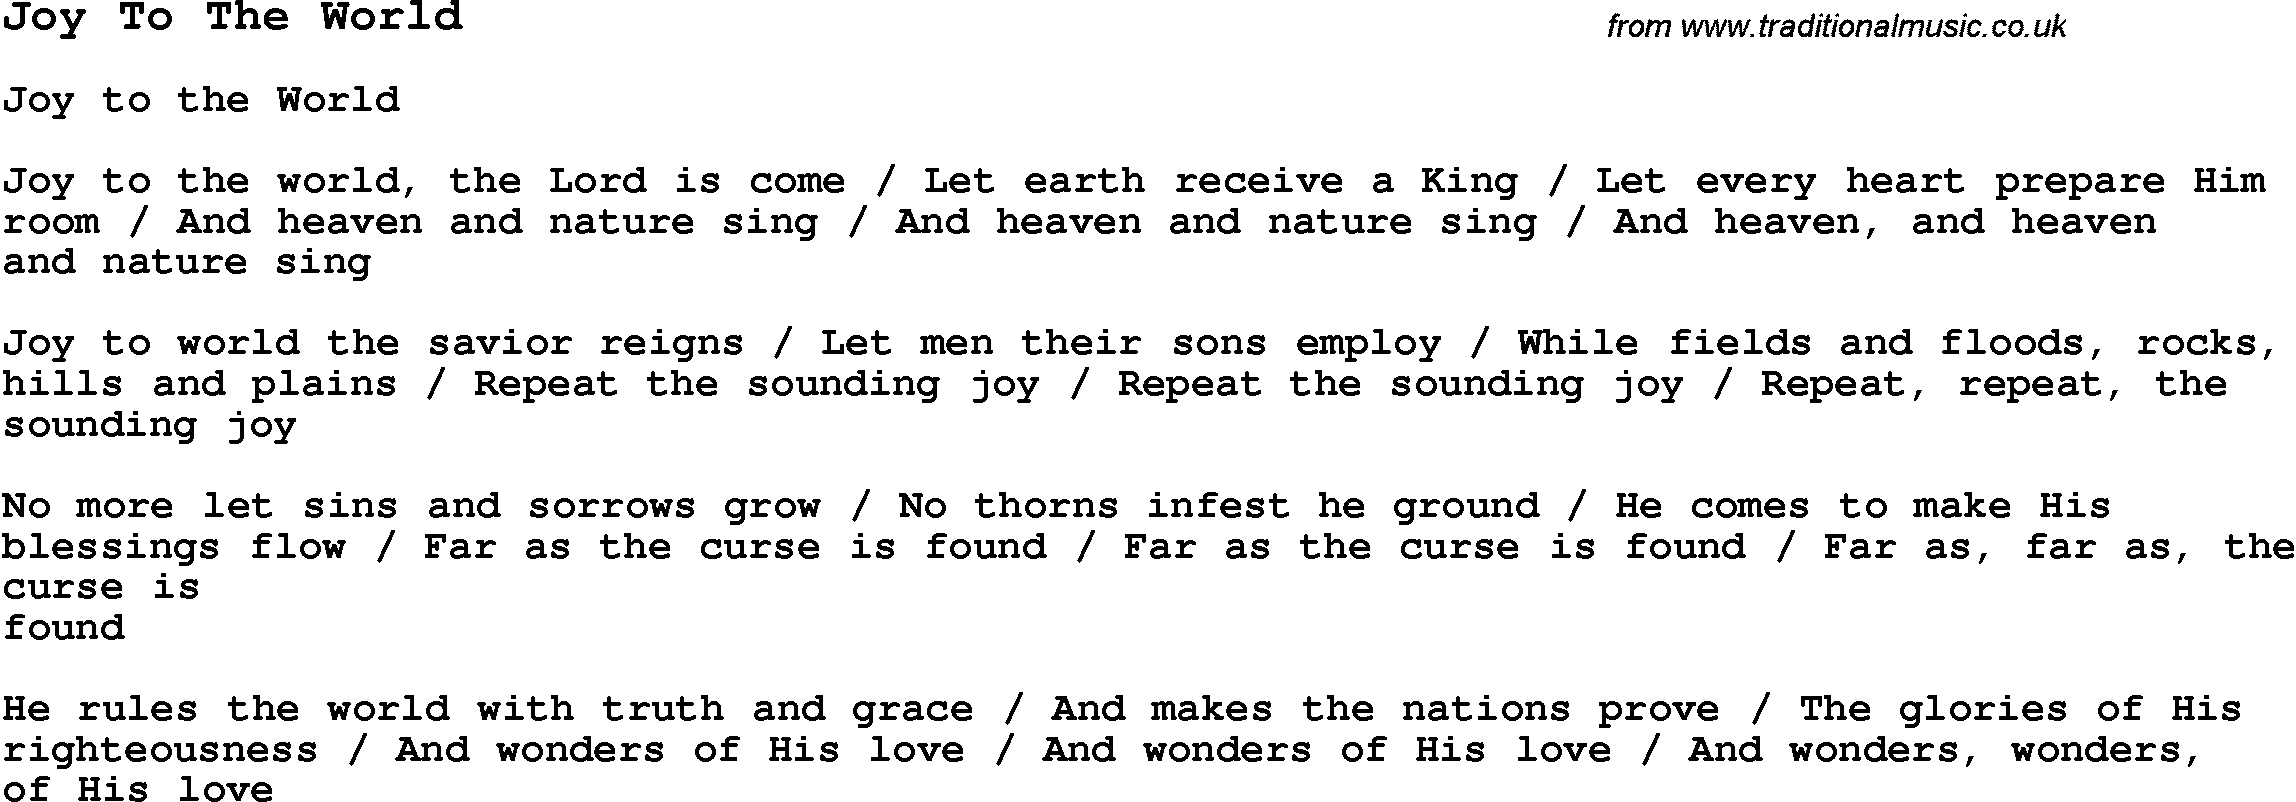 Negro Spiritual Song Lyrics for Joy To The World